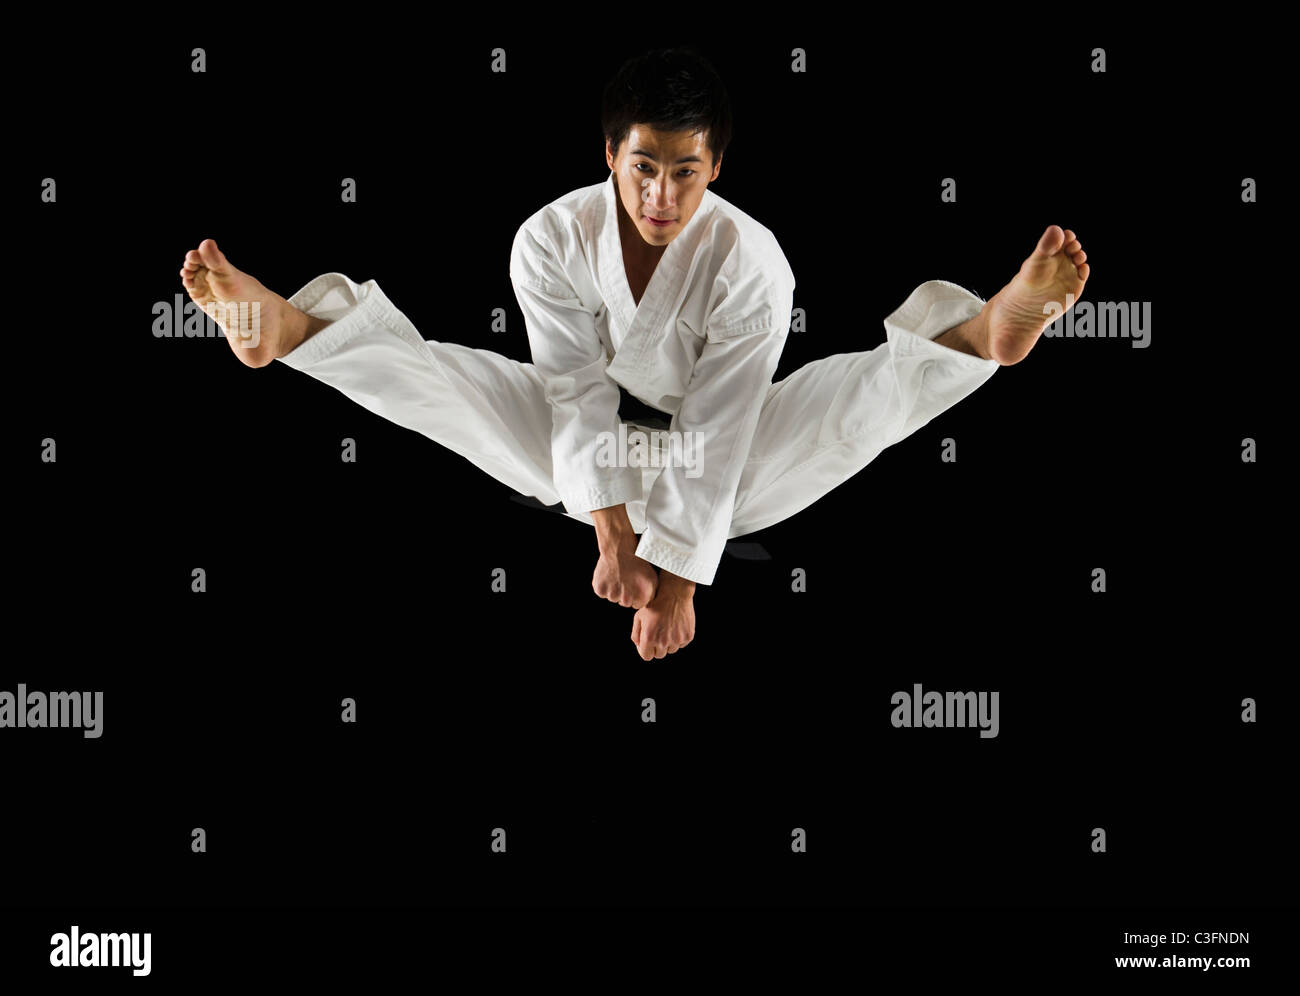 Asian Male Karate Black Belt Kicking In Air Stock Photo Alamy